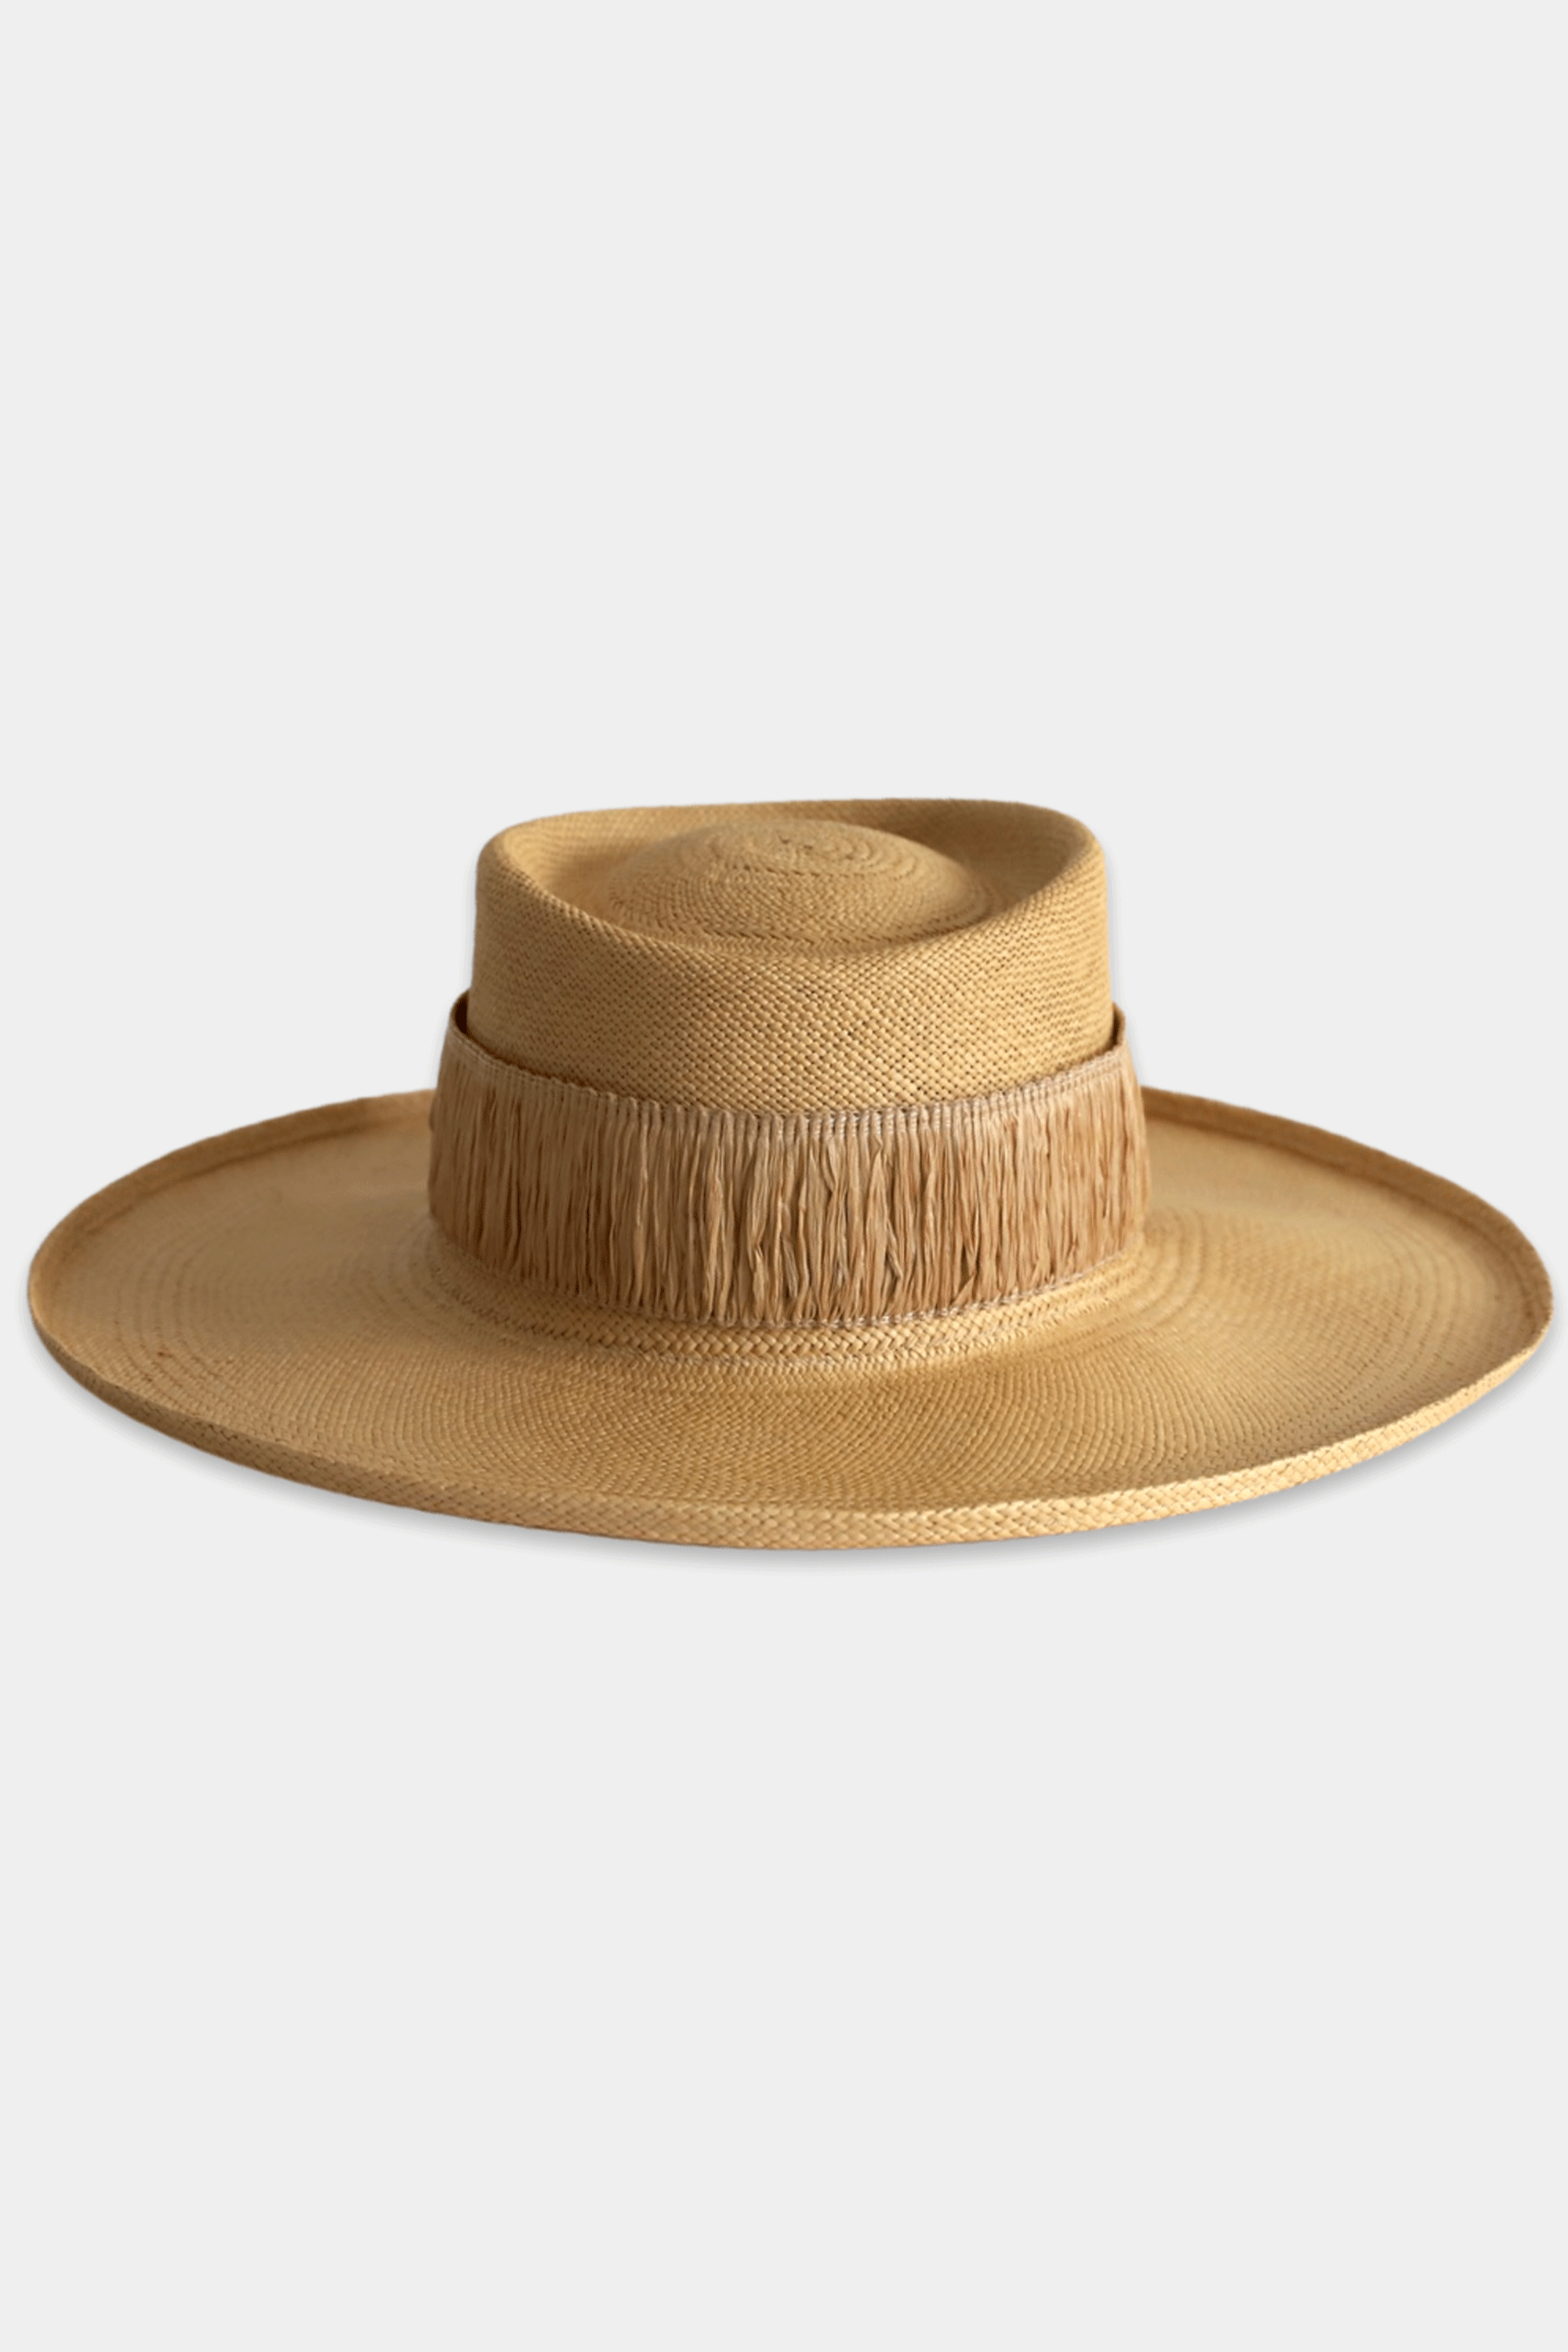 https://nataliyanova.com/wp-content/uploads/2022/04/new-ELSA-%E2%80%93-Handmade-Resort-Straw-Hat-With-a-Staw-Band.png